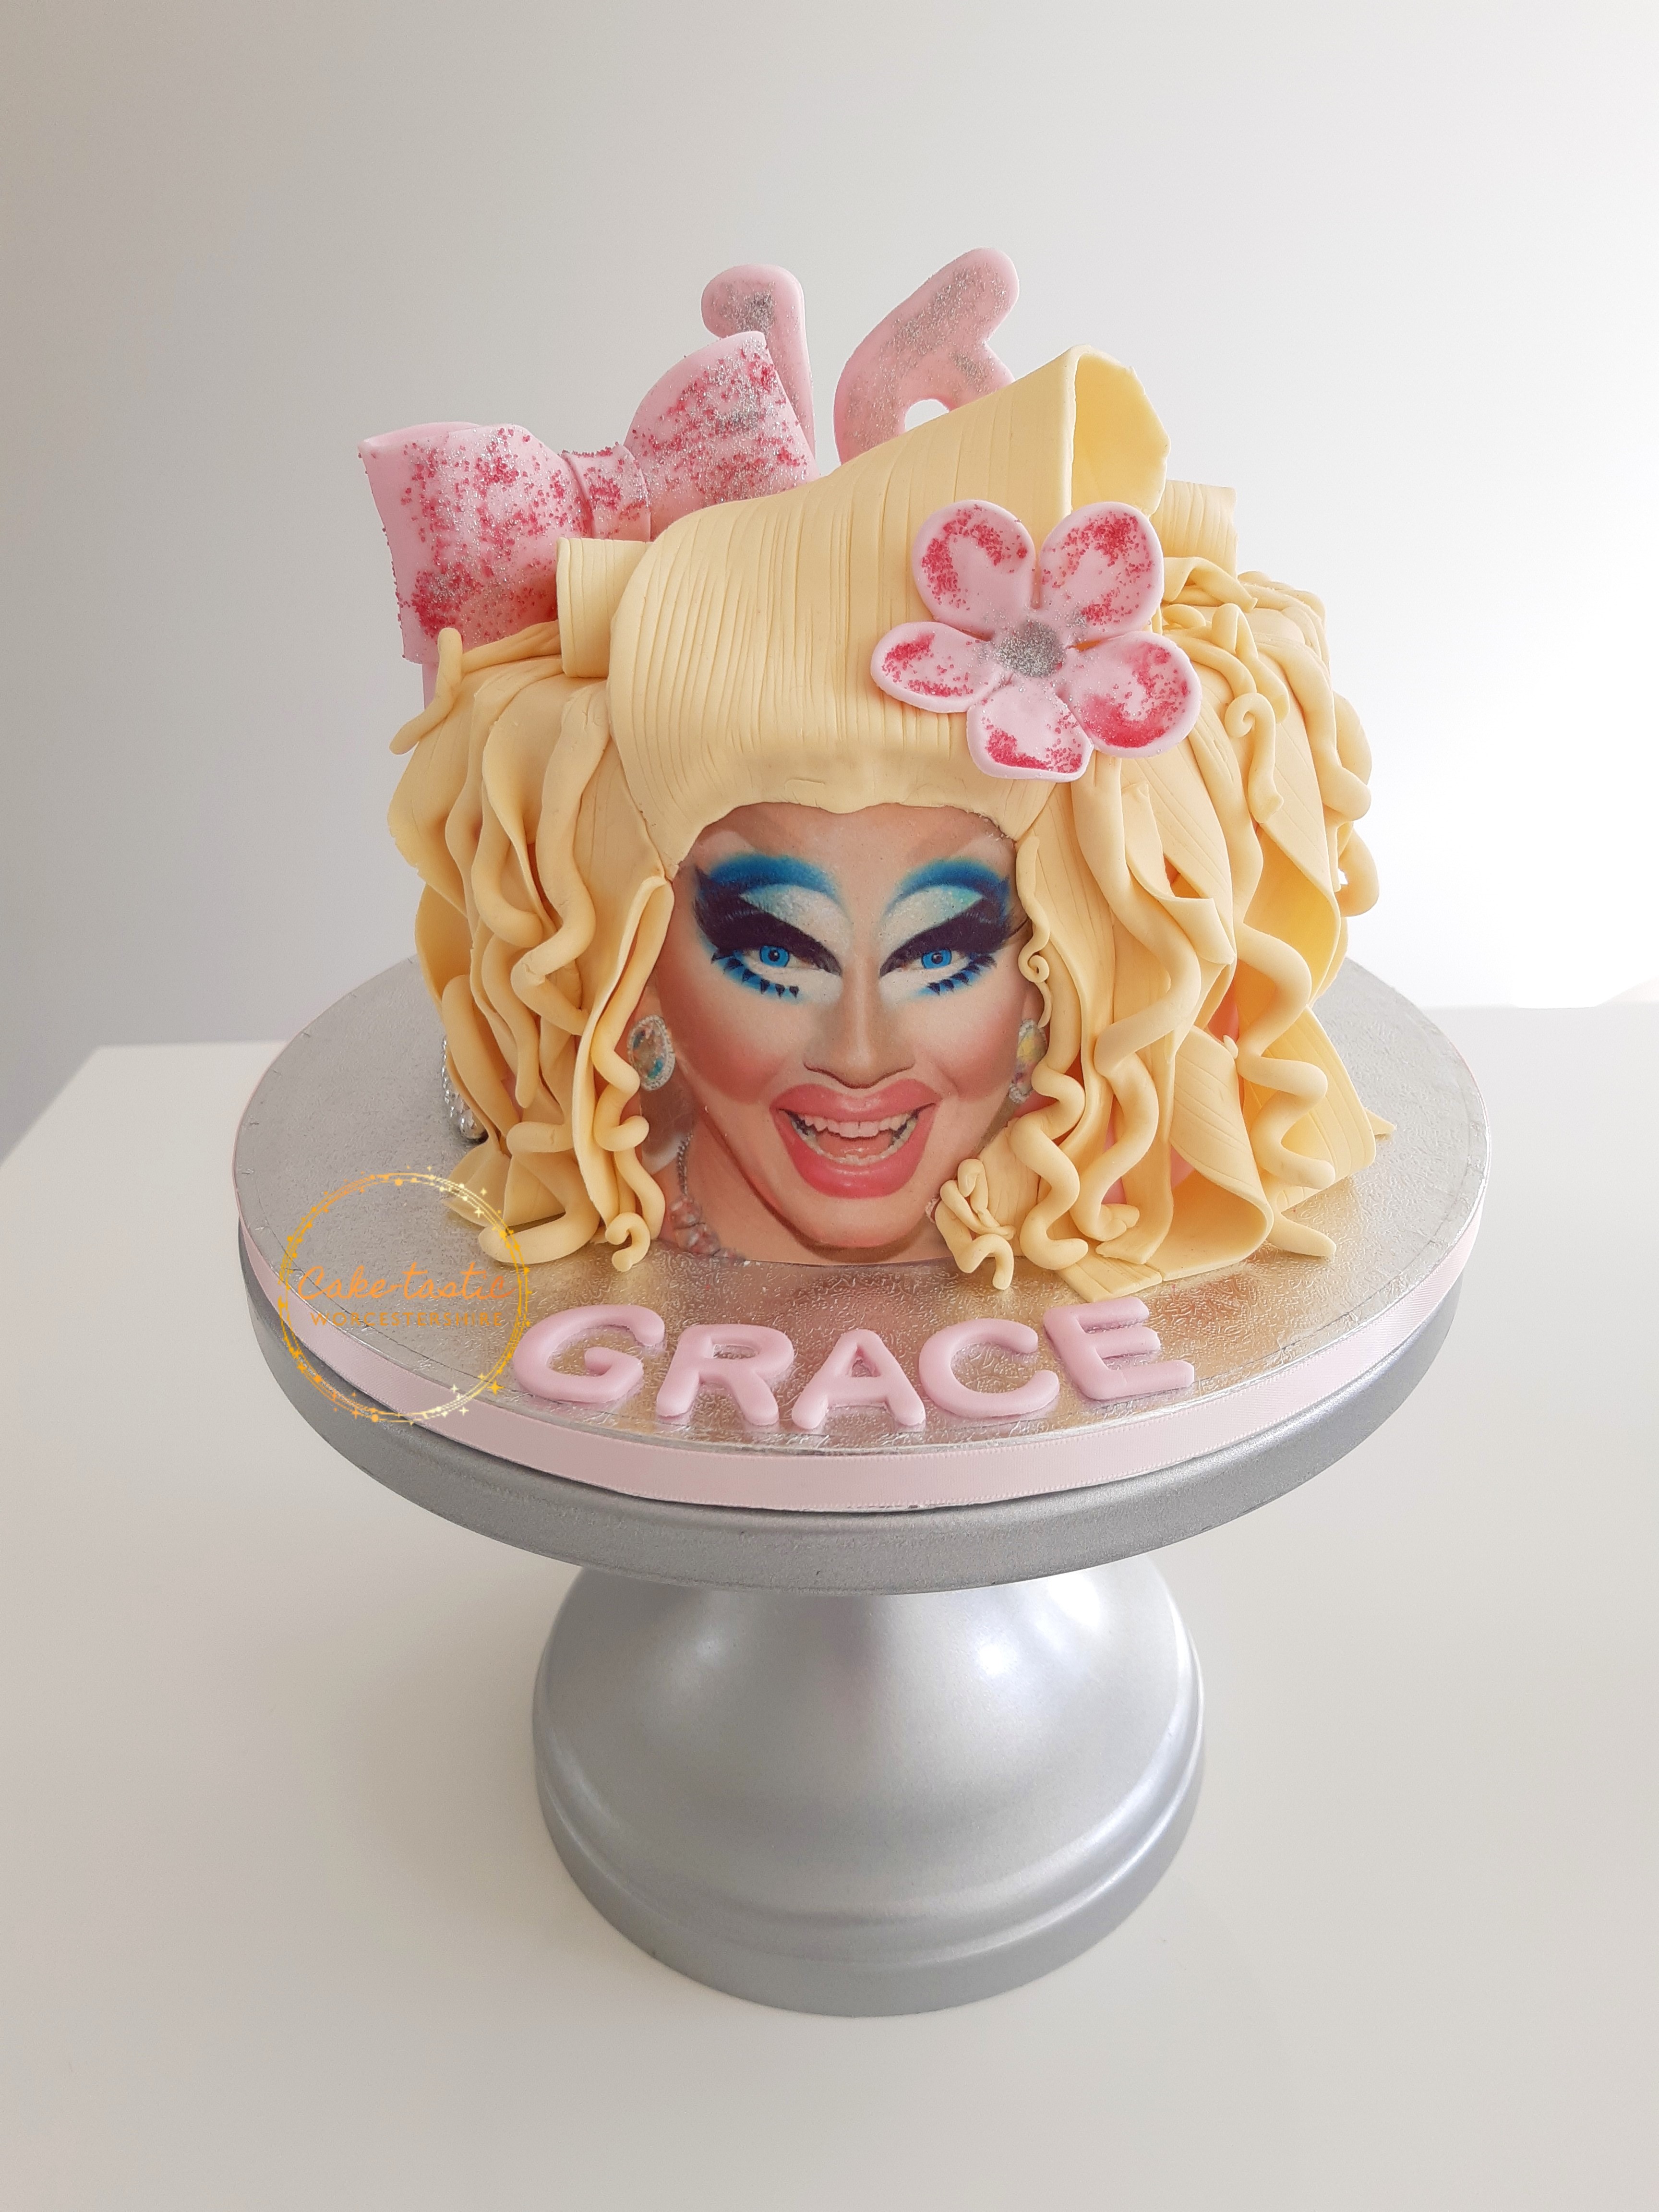 Trixie Mattel - Drag Cake